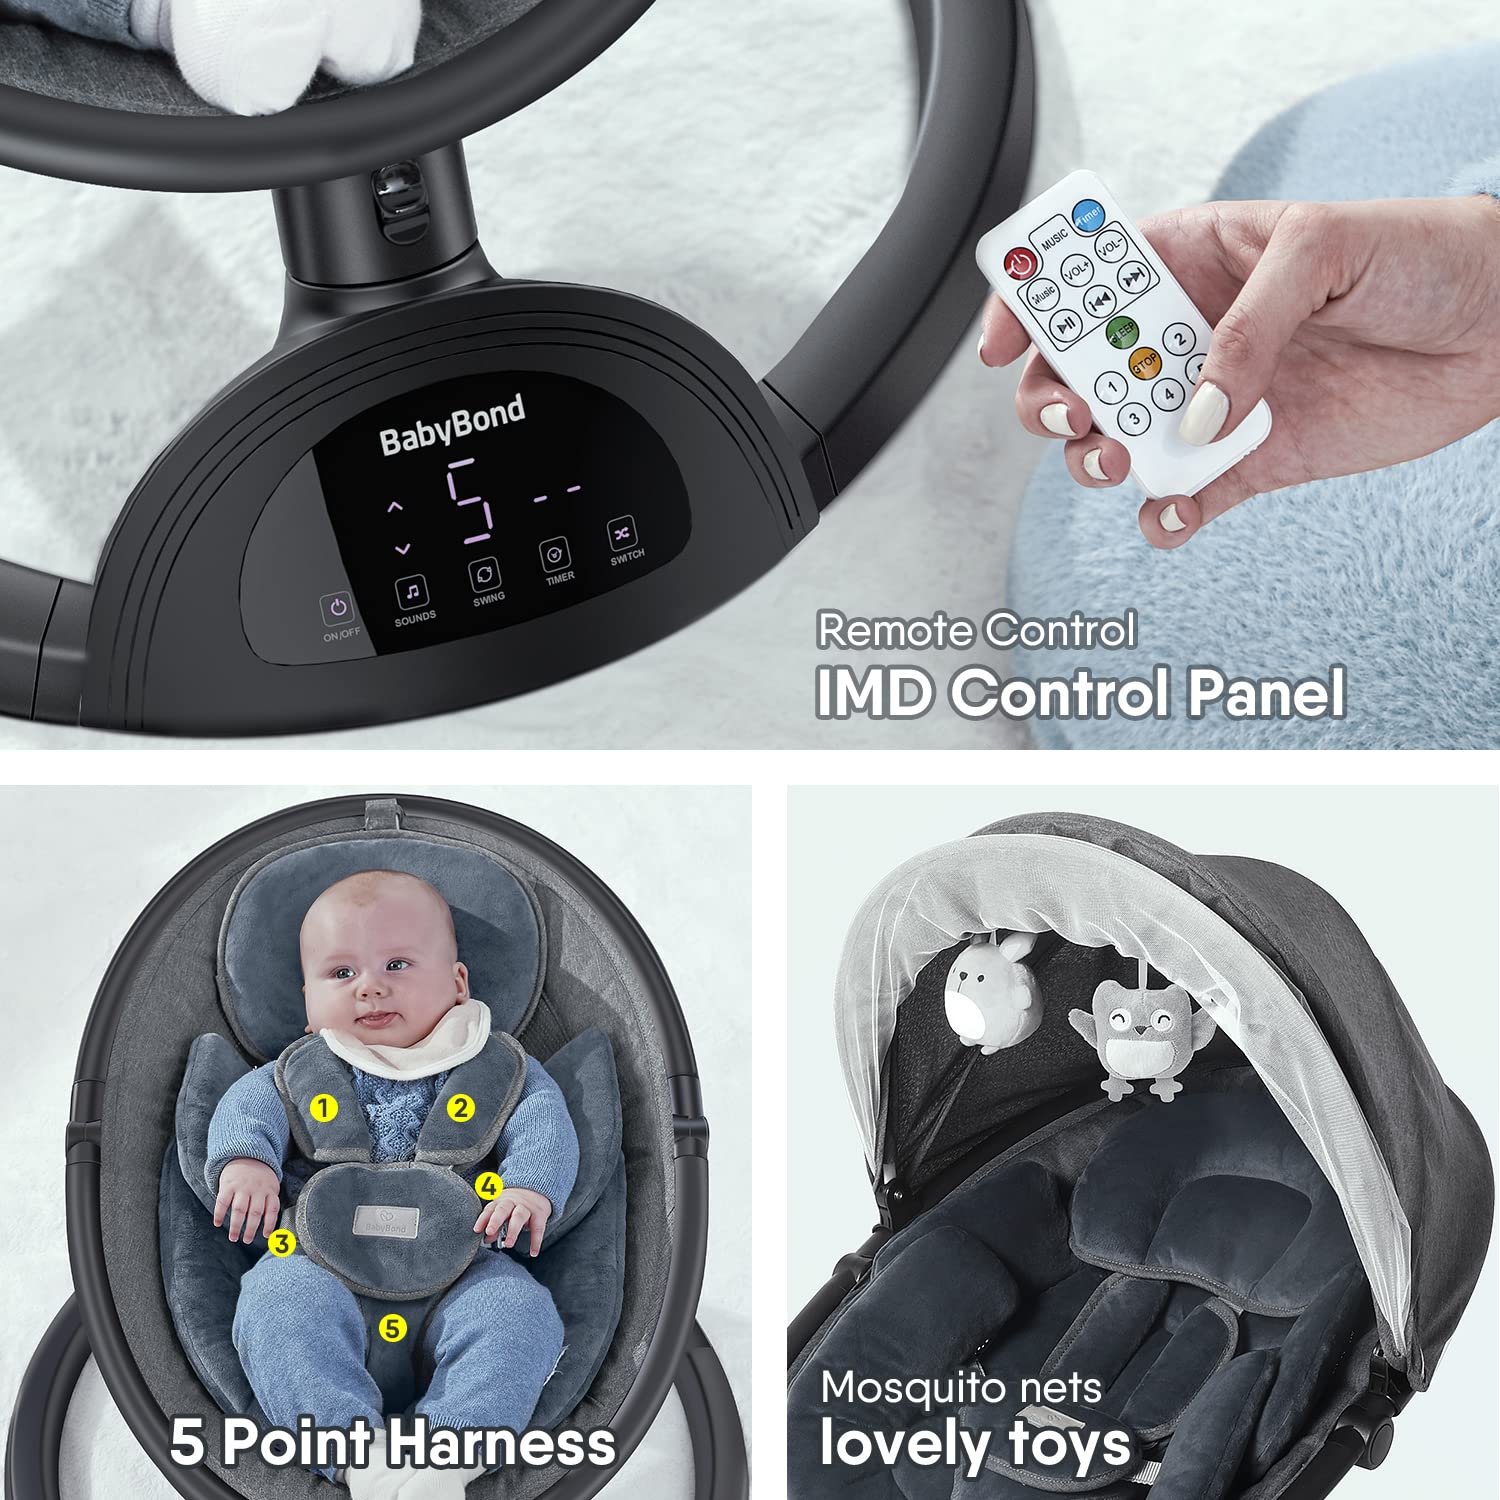 BabyBond Baby Swings for Infants Bluetooth Infant Swing